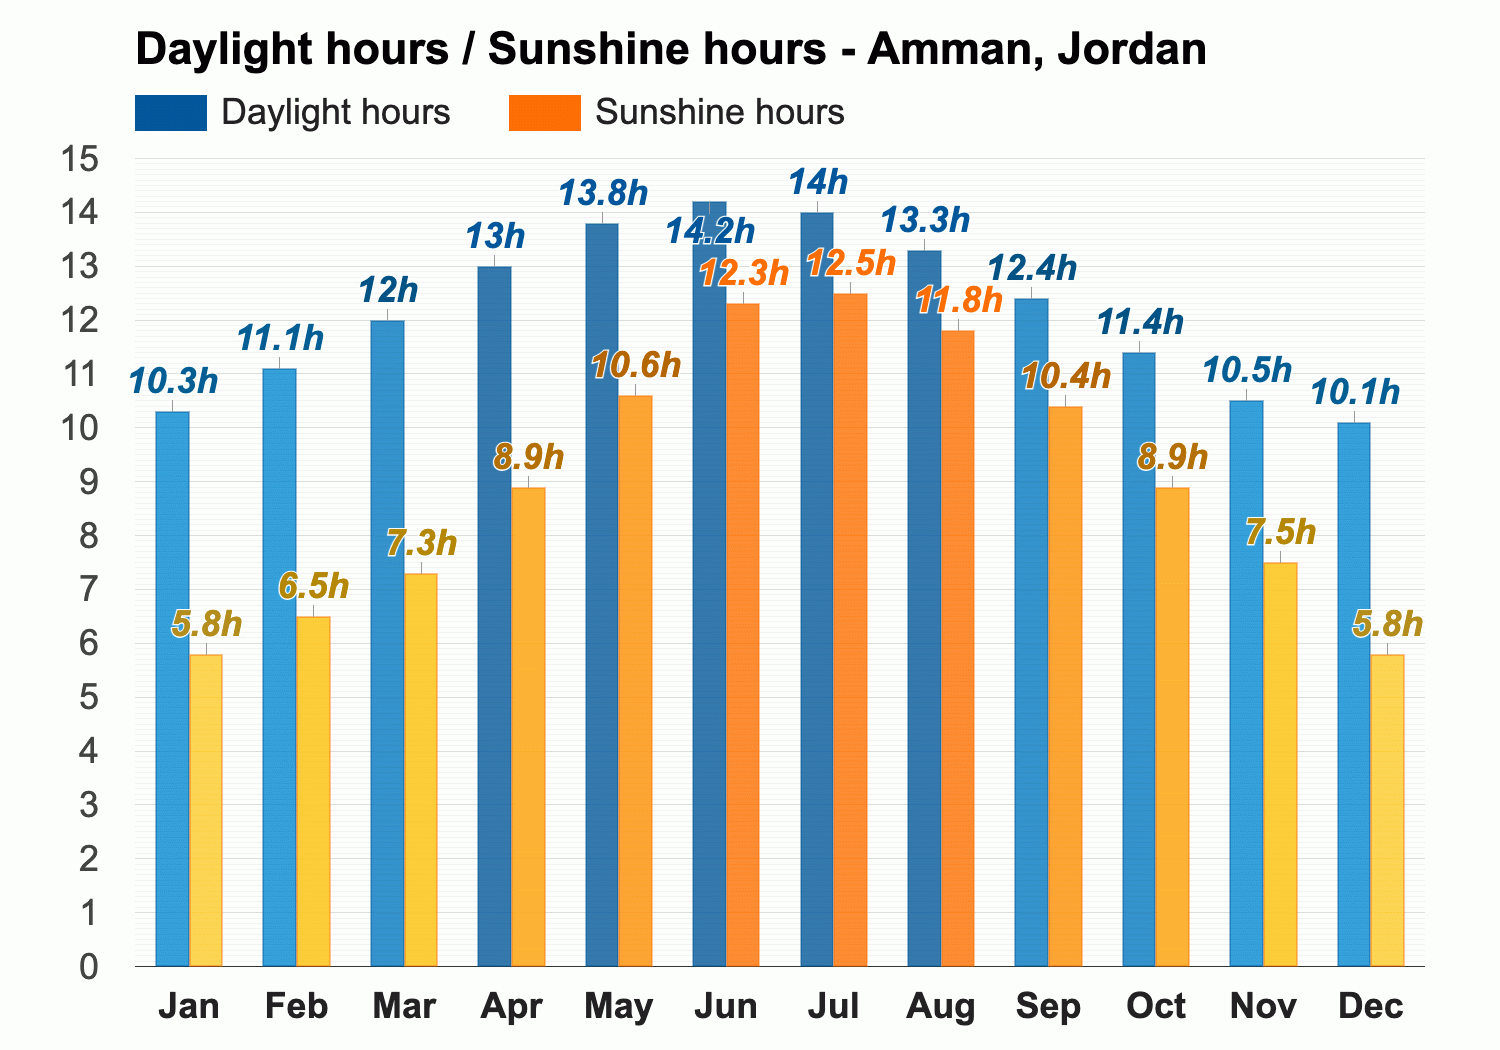 March Weather forecast - Spring forecast - Amman, Jordan